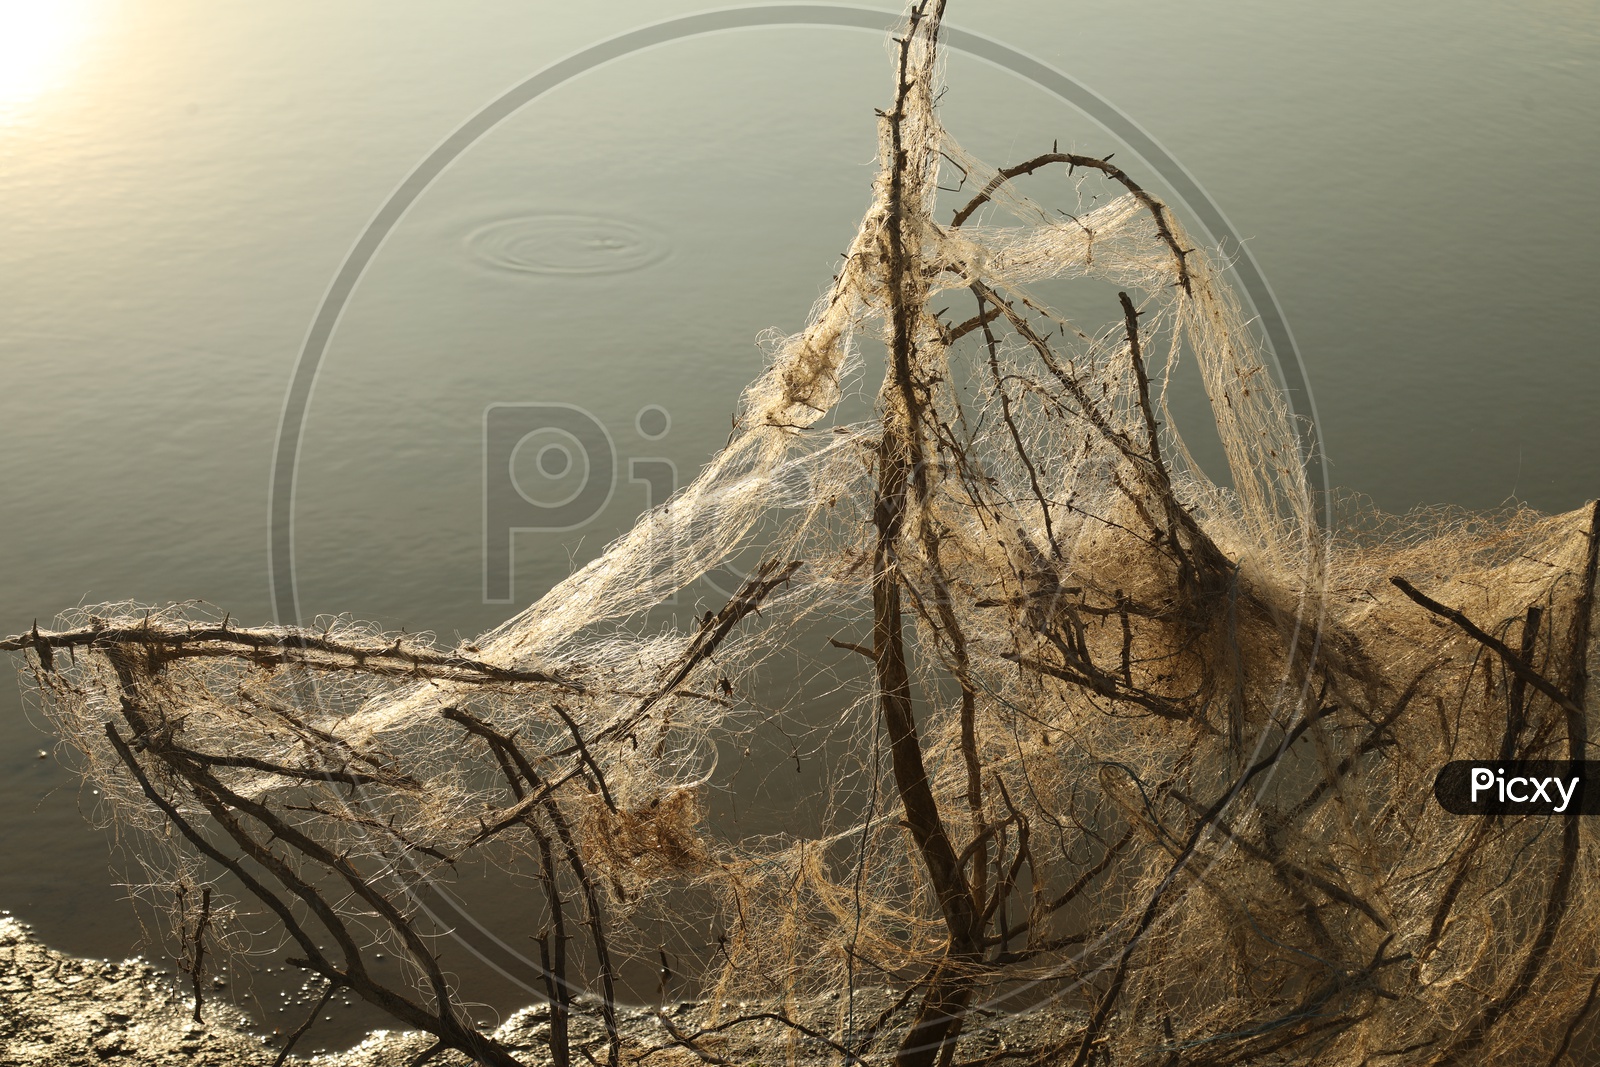 A tangled fishing net